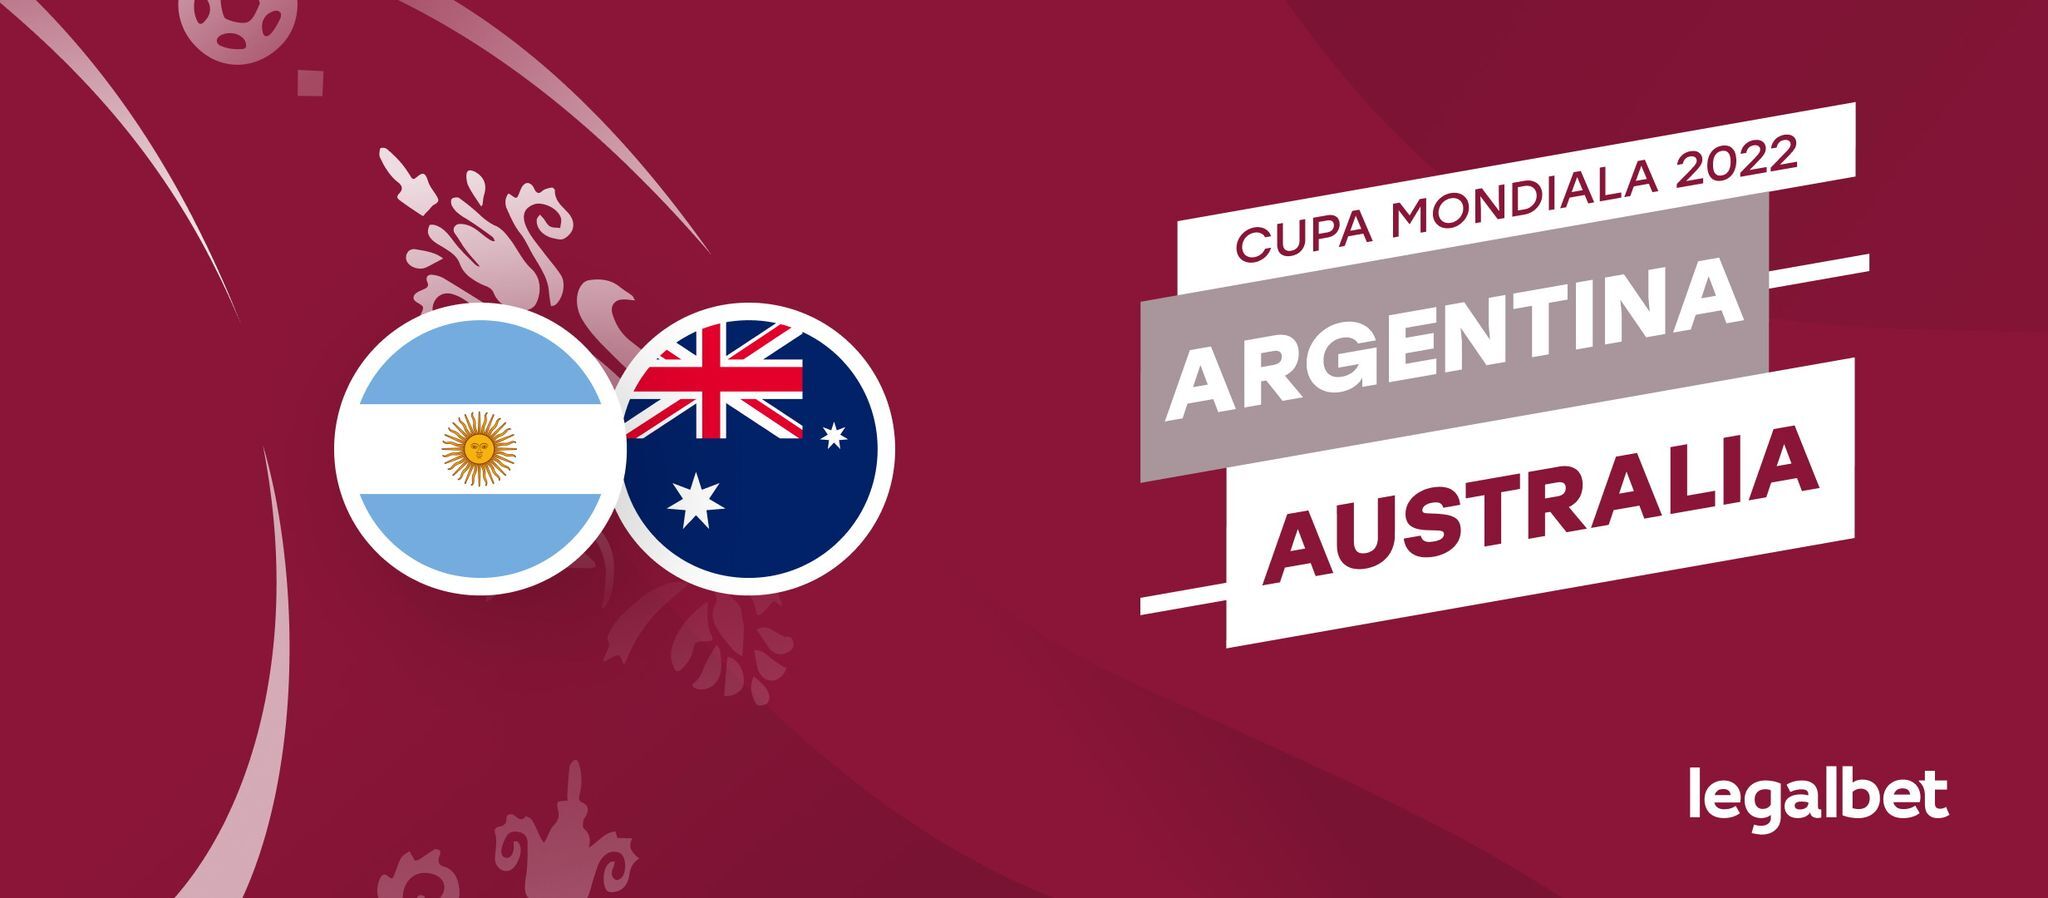 Argentina vs Australia – cote la pariuri, ponturi si informatii